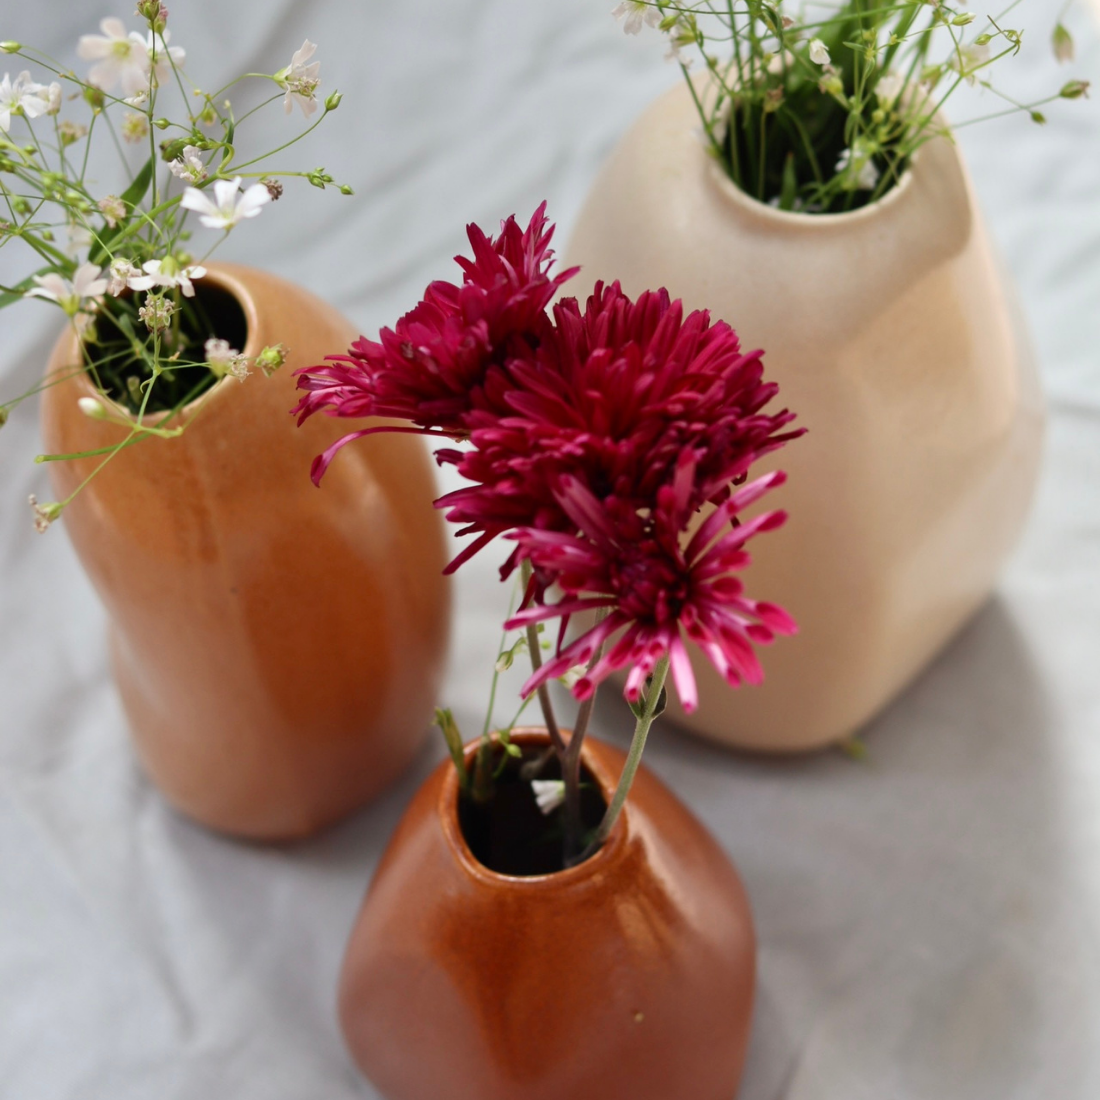 Handmade mistif flower pots with flowers